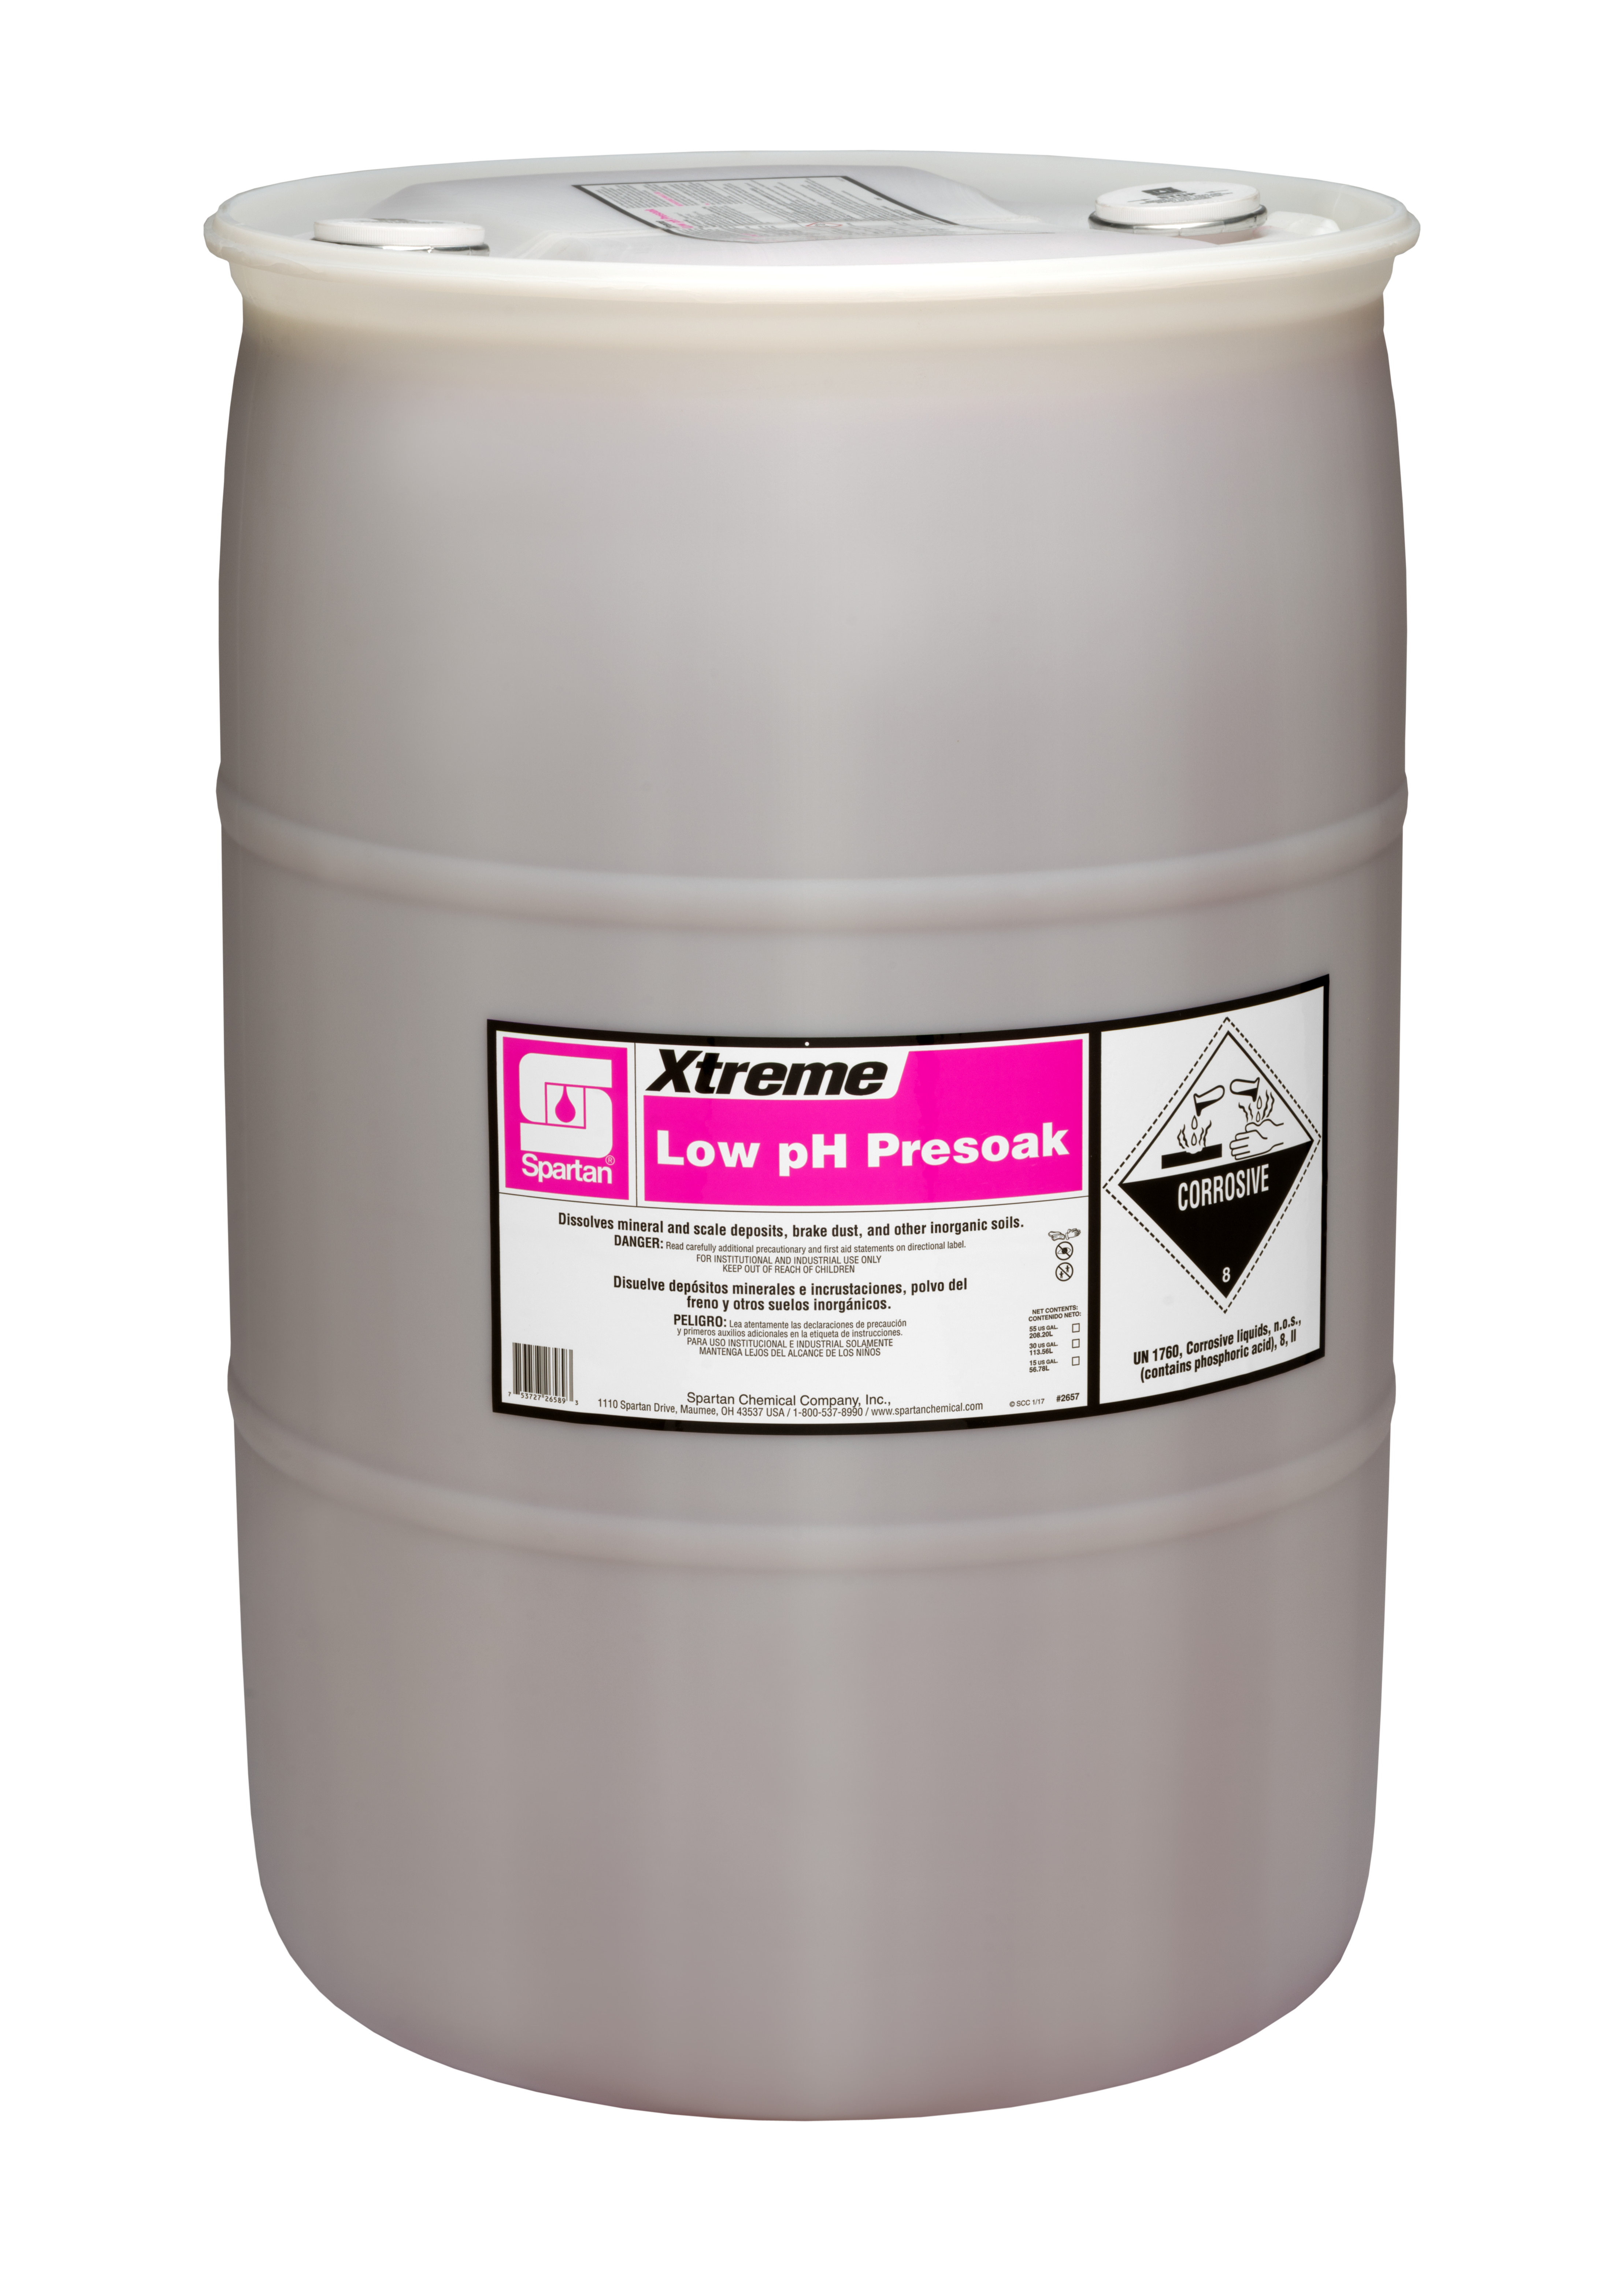 Spartan Chemical Company Xtreme Low pH Presoak, 55 GAL DRUM